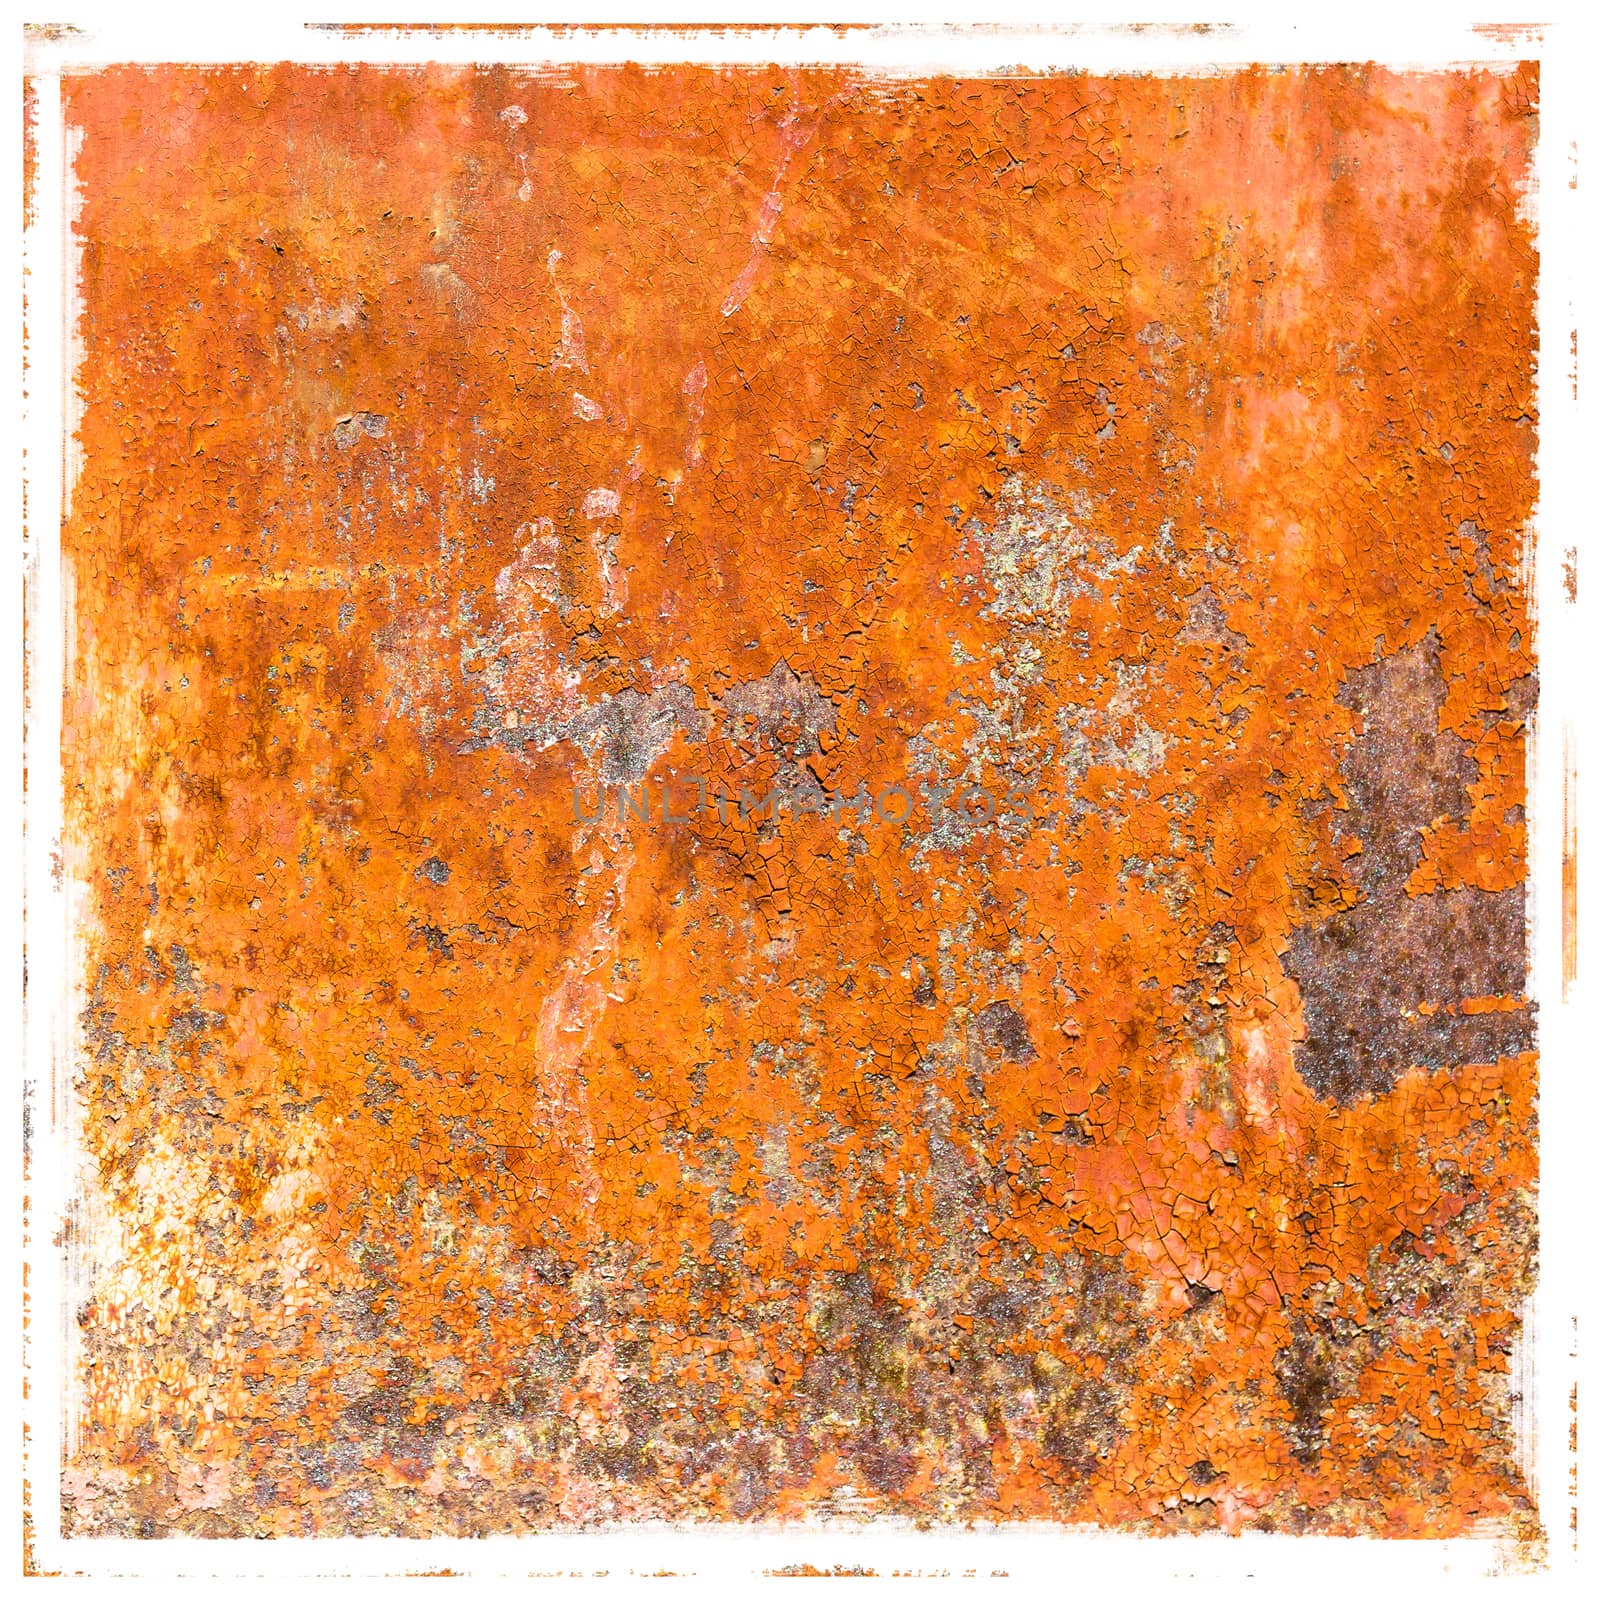 Rusty metallic frame texture background